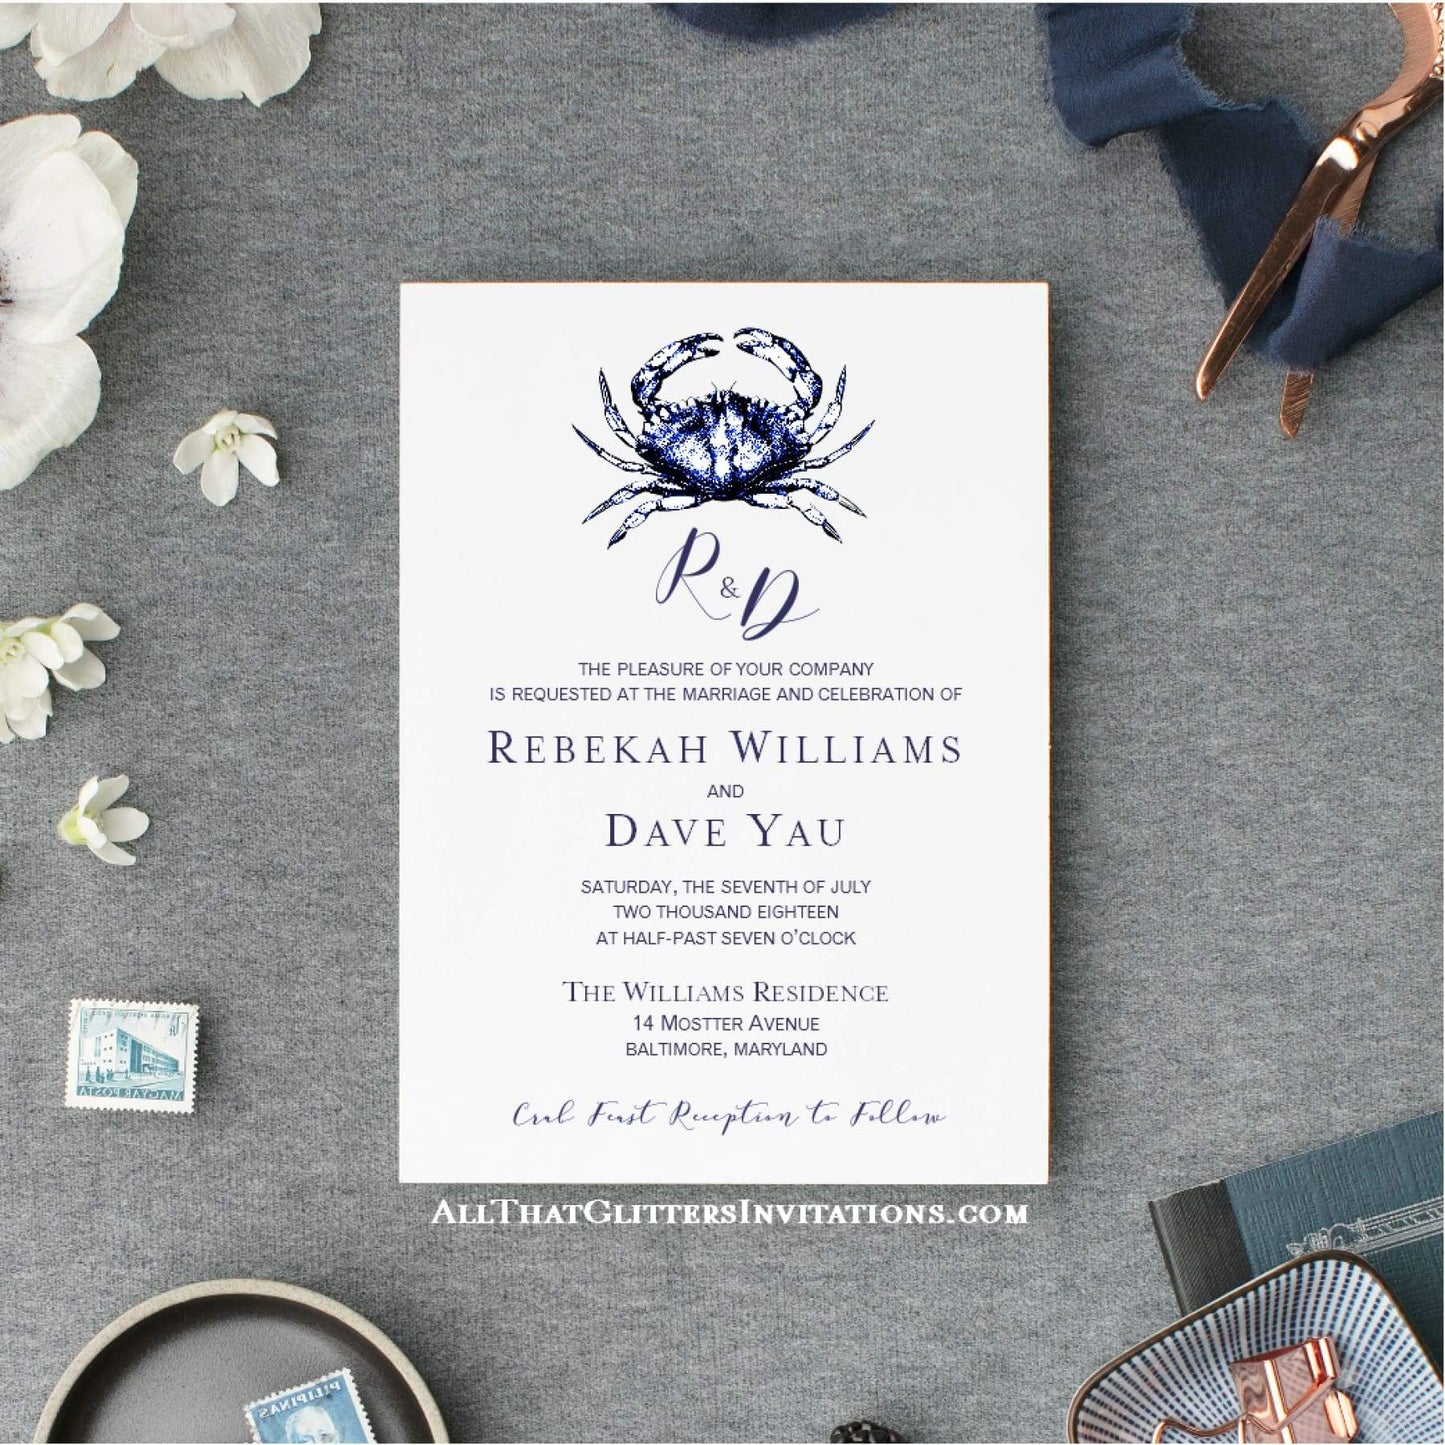 Maryland Blue Crab Wedding Invitations - All That Glitters Invitations